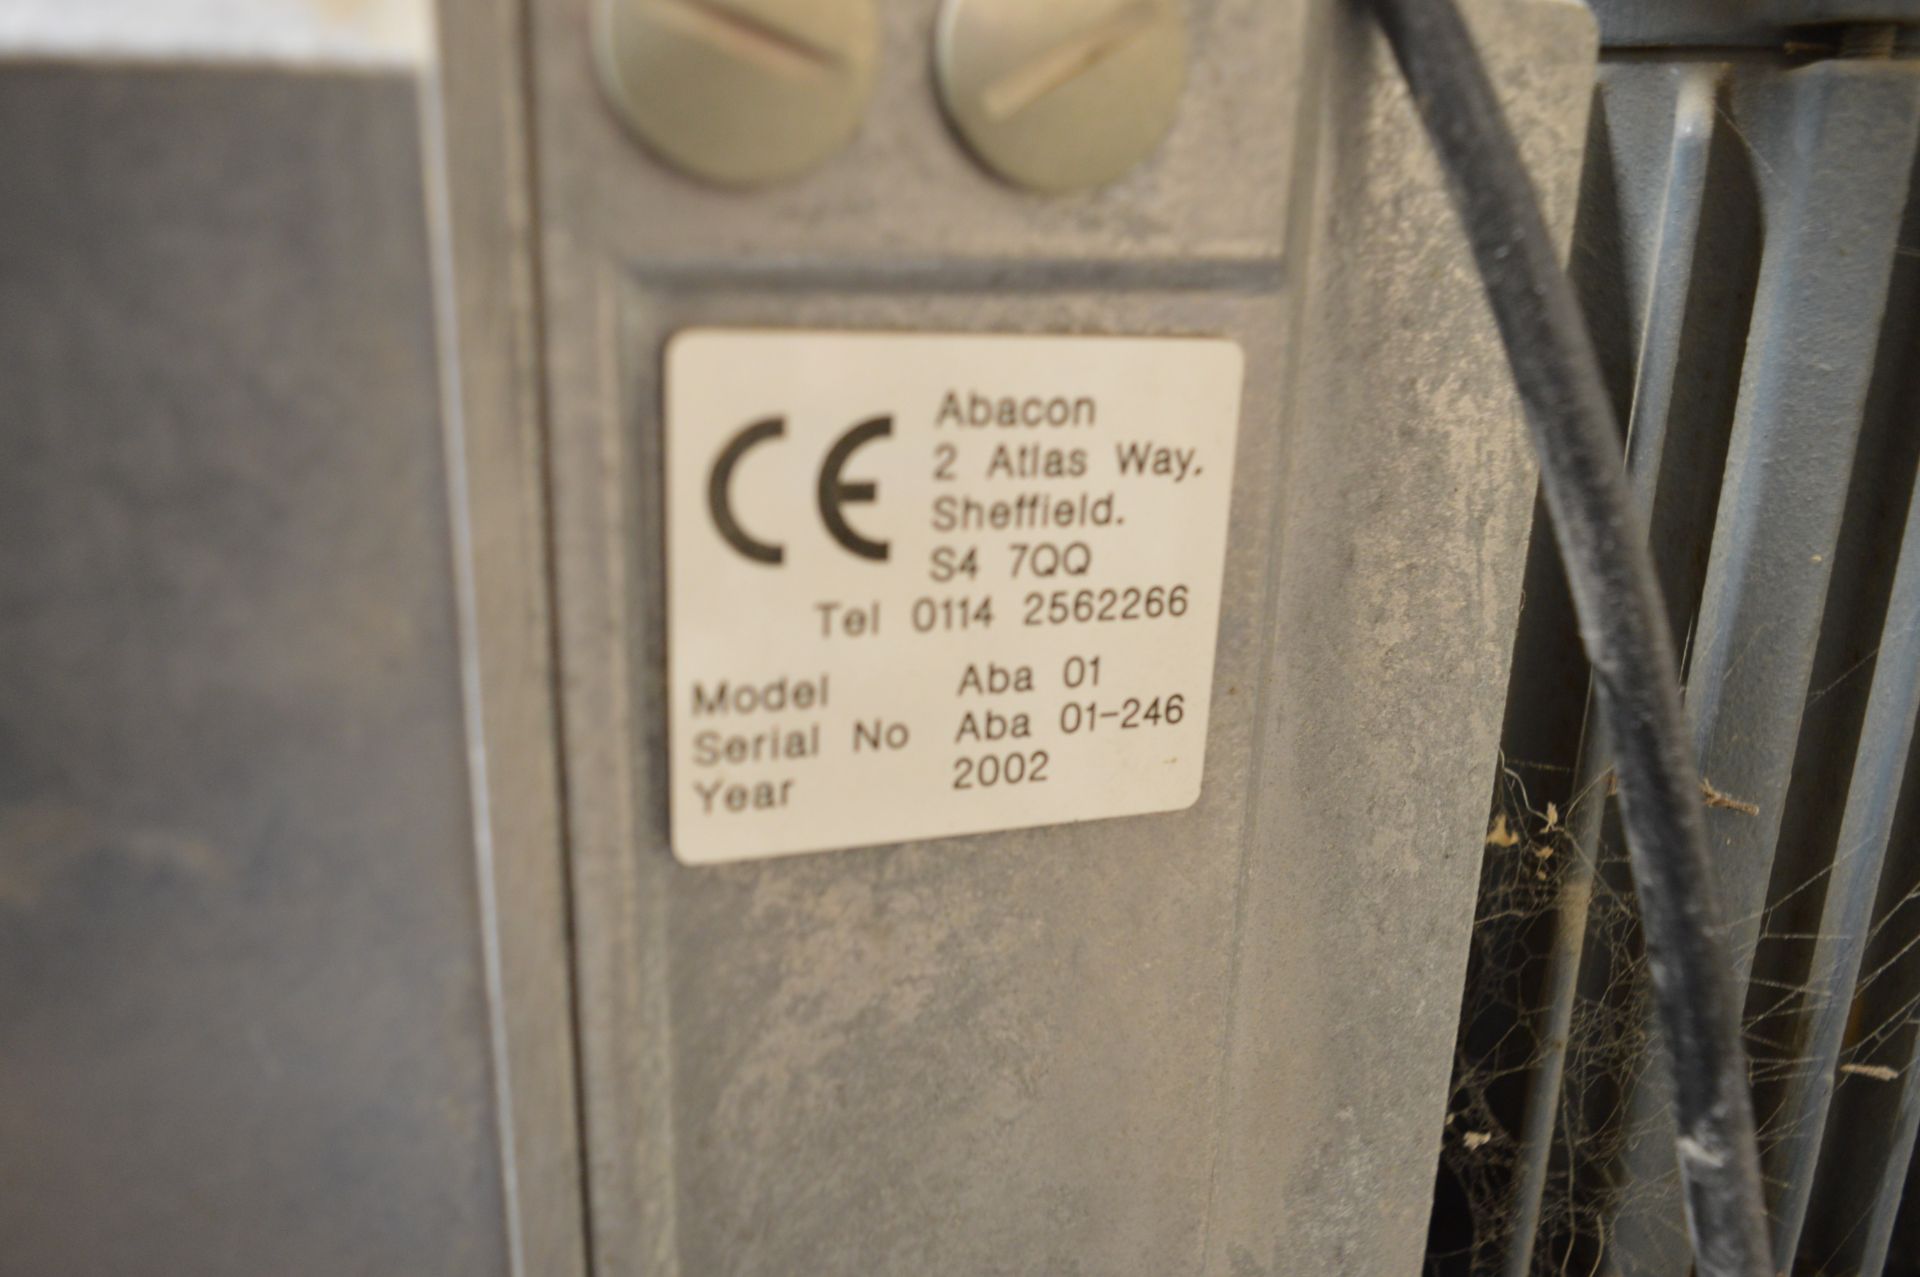 KEB ABA01 wheel sander / polisher, Serial No. 01-246 (2002) (Location: Two Gates on mezzanine) - Image 3 of 5